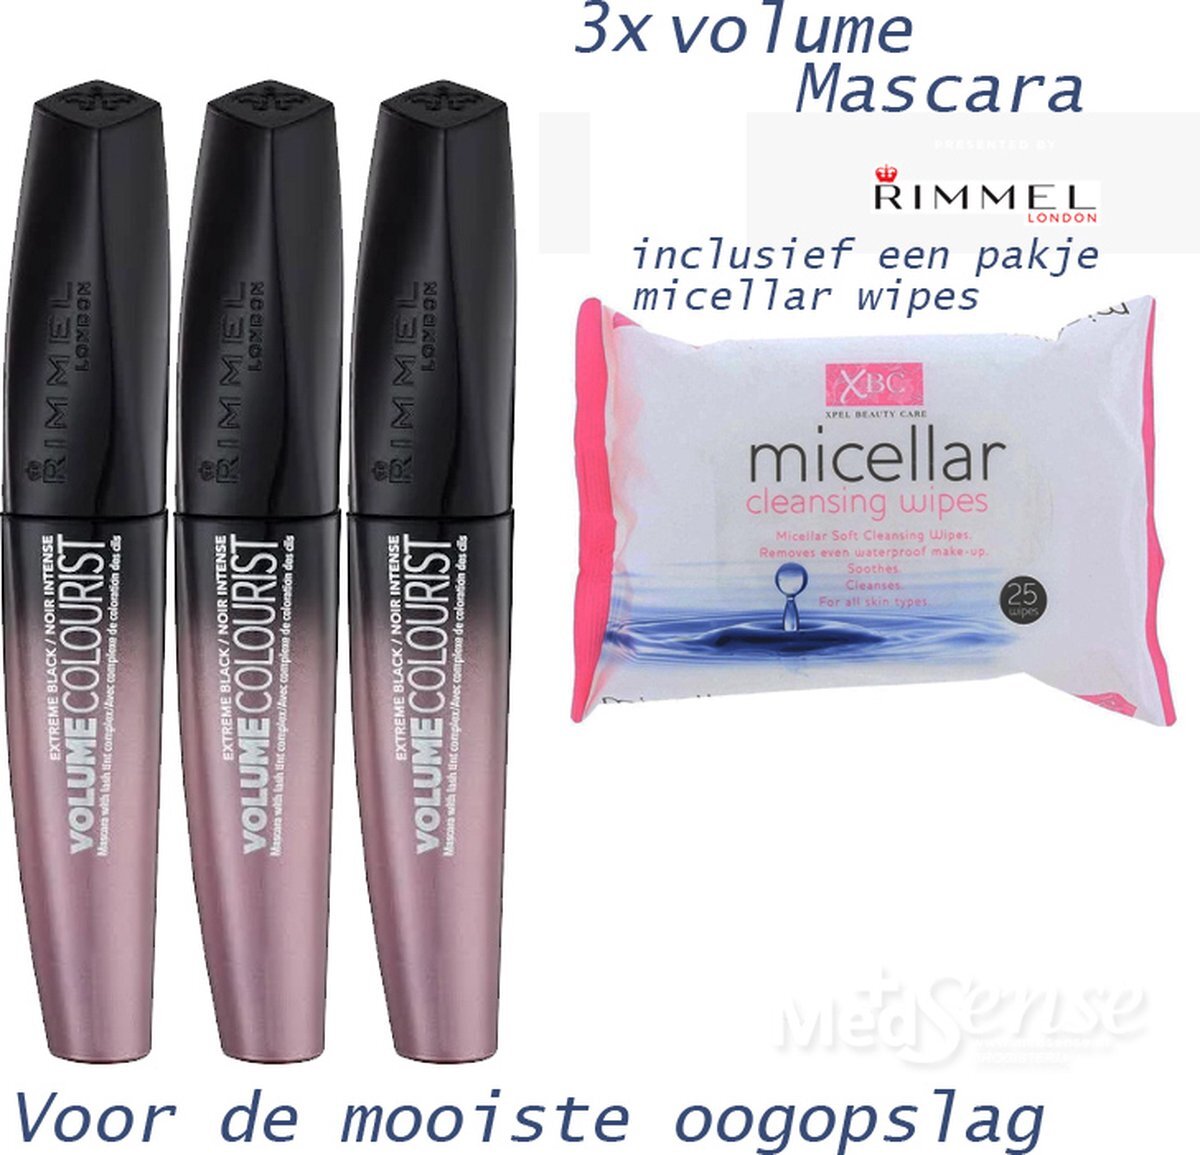 Rimmel London Rimmel volume Colourist mascara-extreme Black- per drie stuks en een pakje micellar cleansing wipes